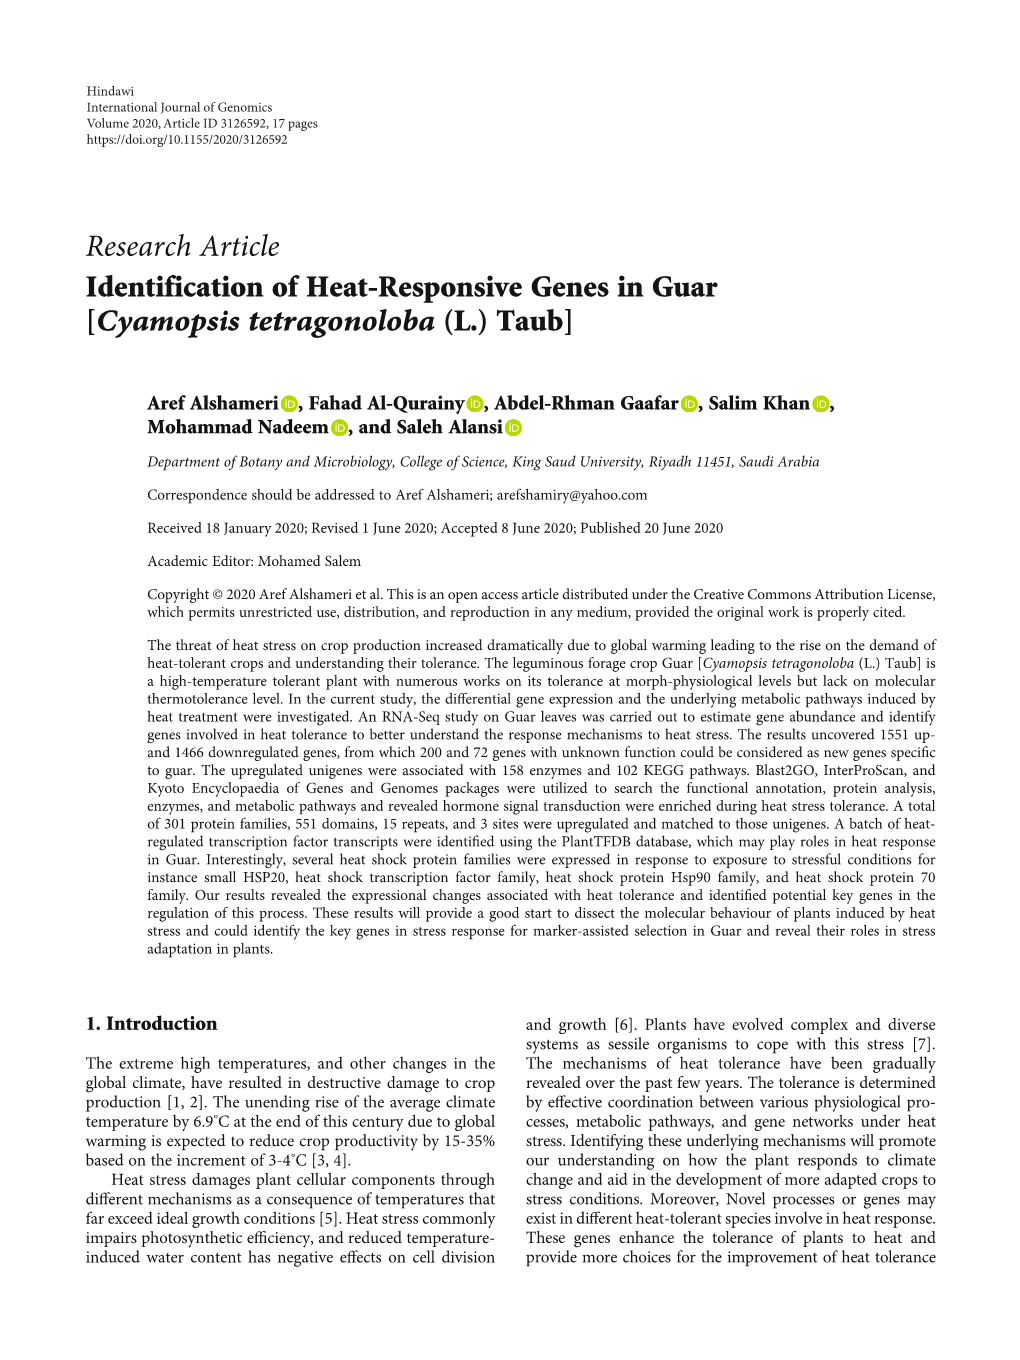 Research Article Identification of Heat-Responsive Genes in Guar [Cyamopsis Tetragonoloba (L.) Taub]